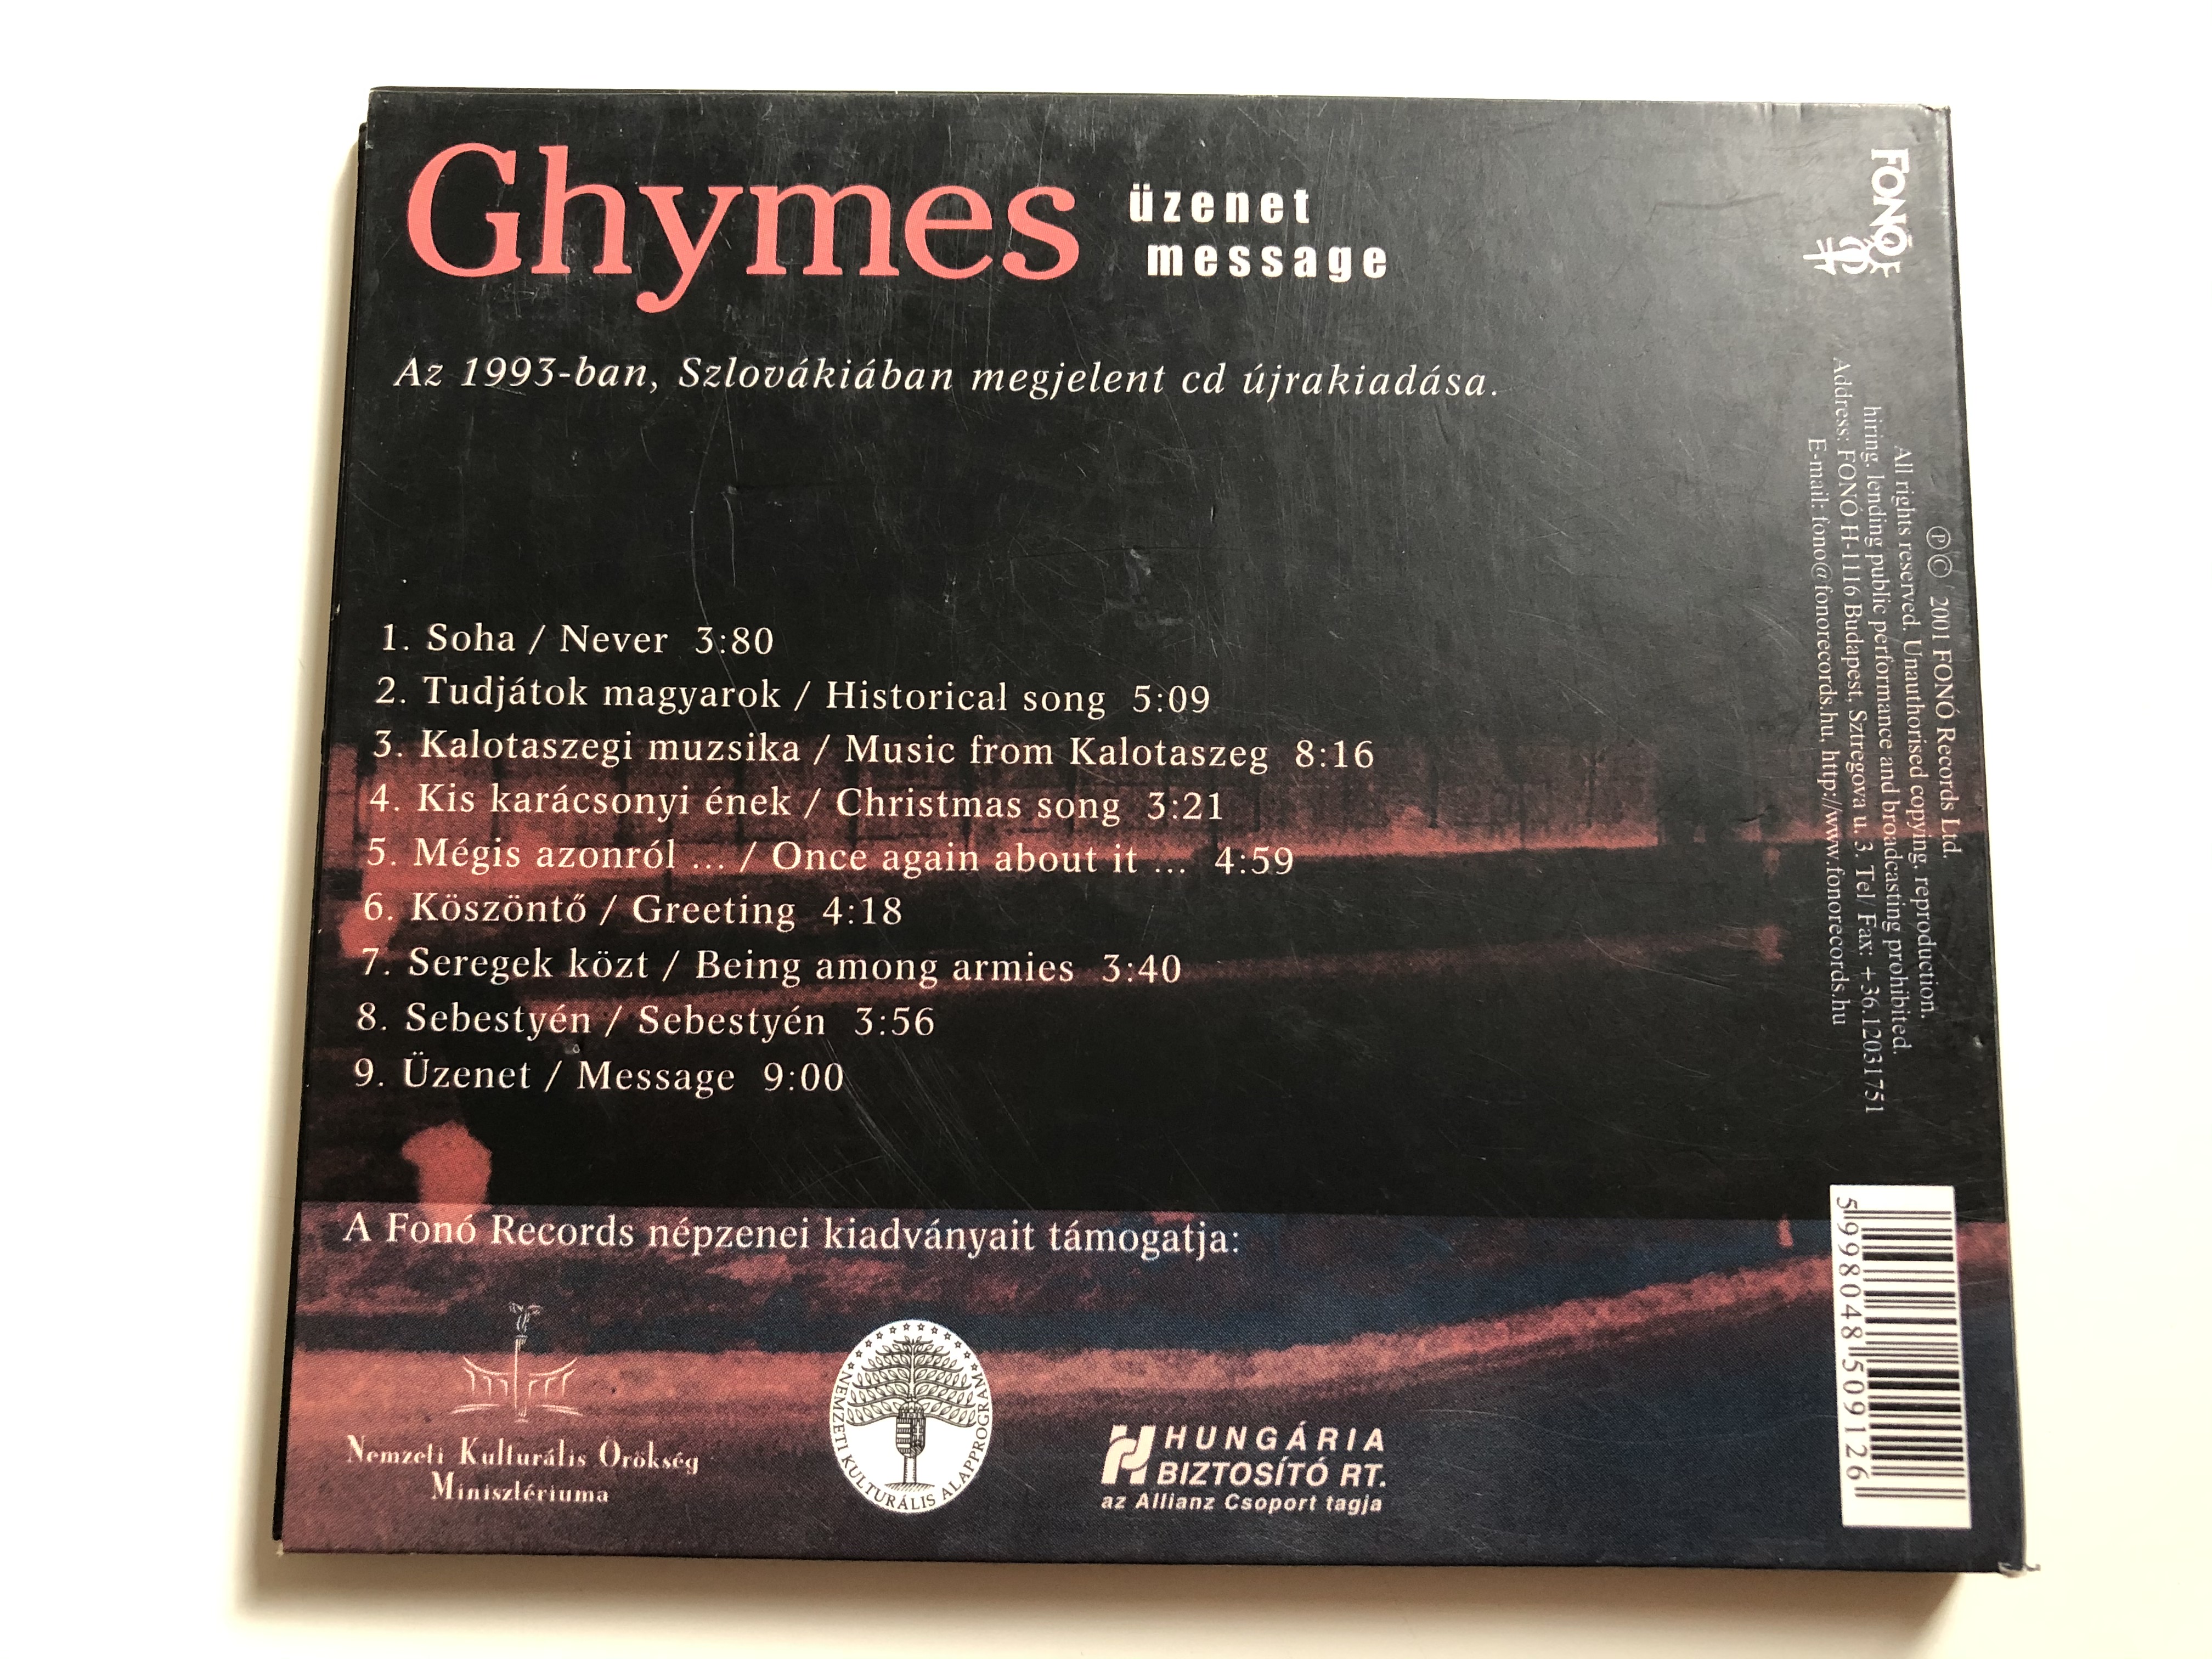 ghymes-zenet-message-fon-records-audio-cd-2001-fa-091-2-4-.jpg